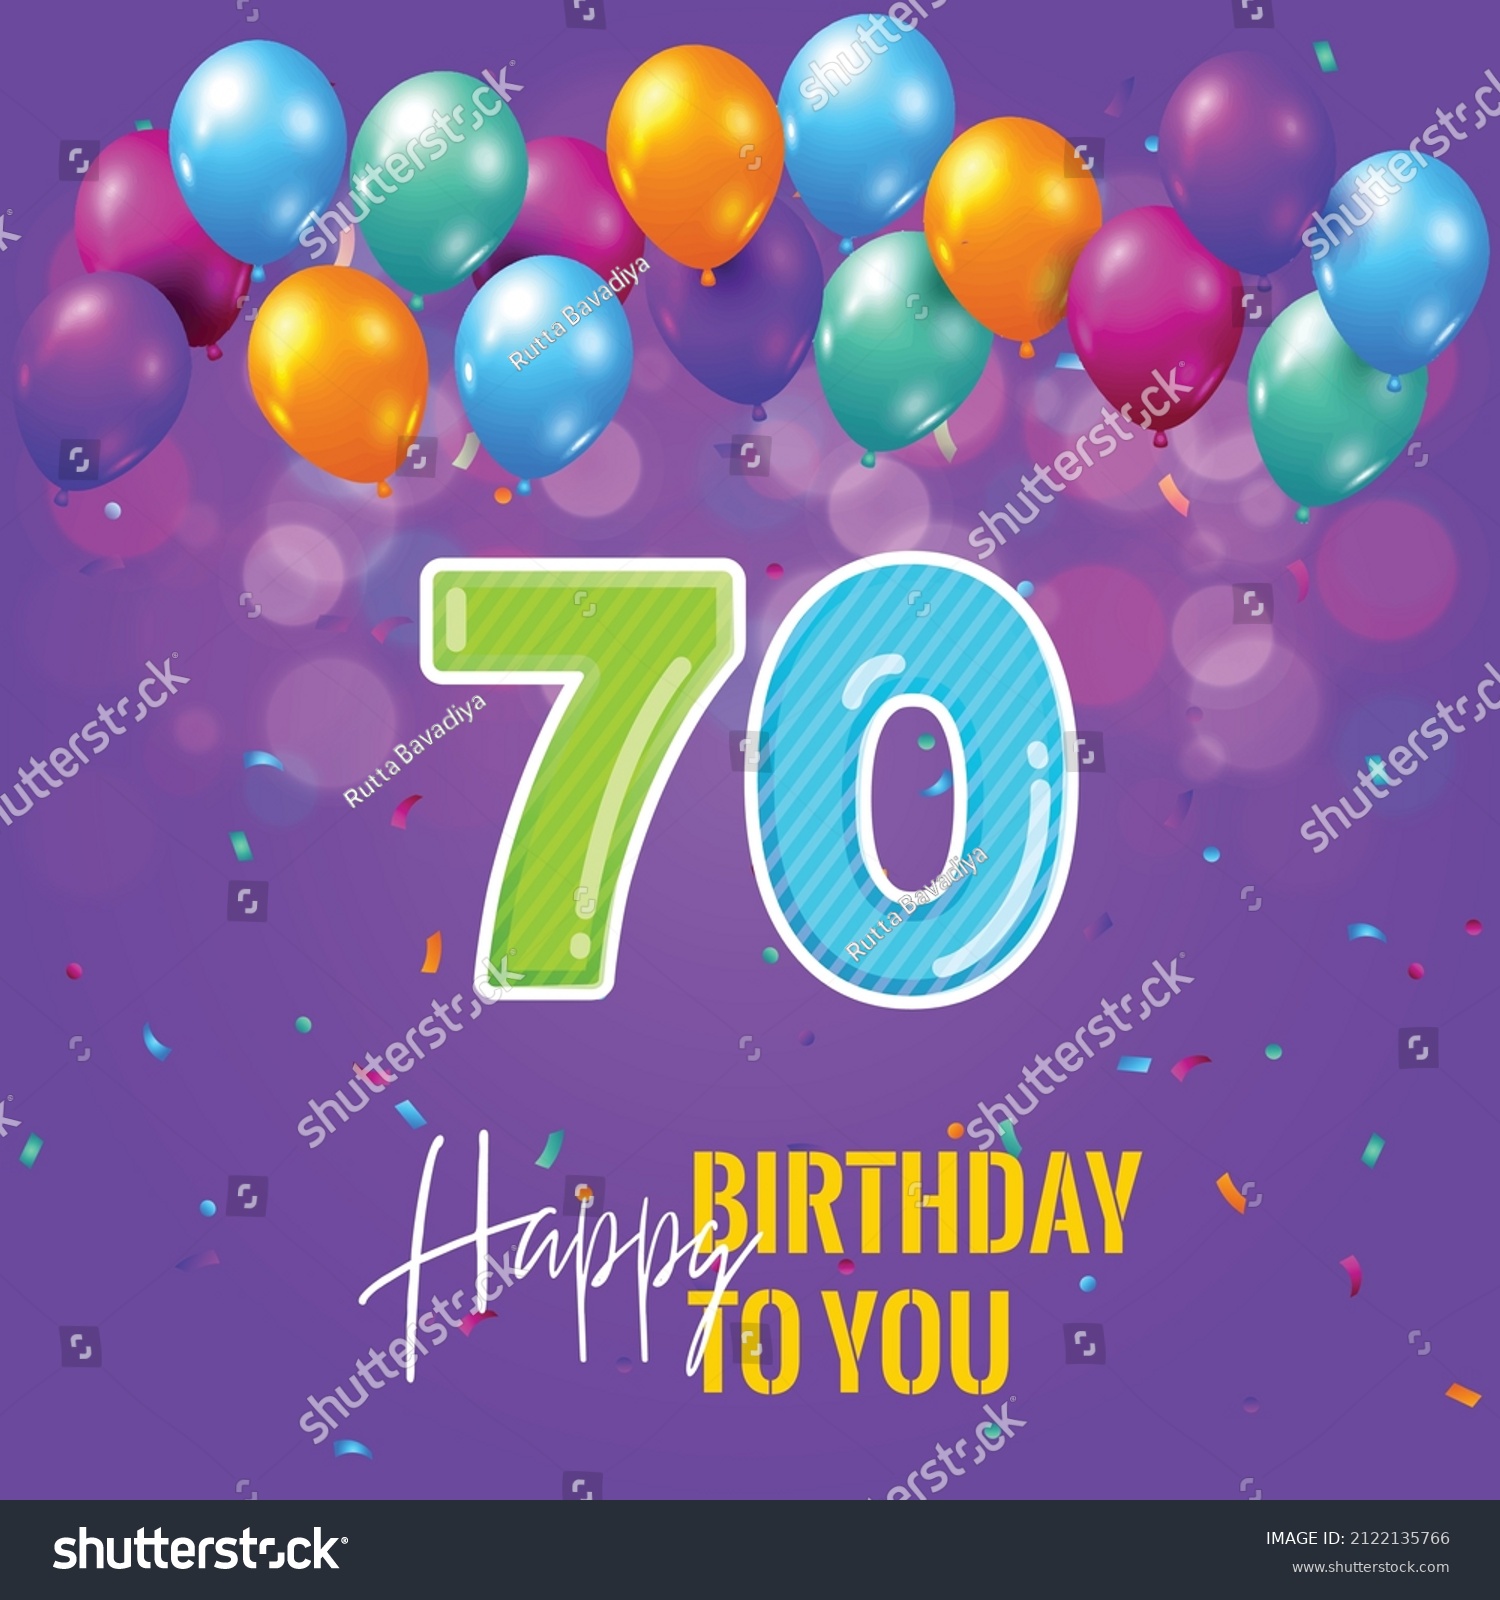 SVG of Happy 70th birthday, greeting card, vector illustration design.
 svg